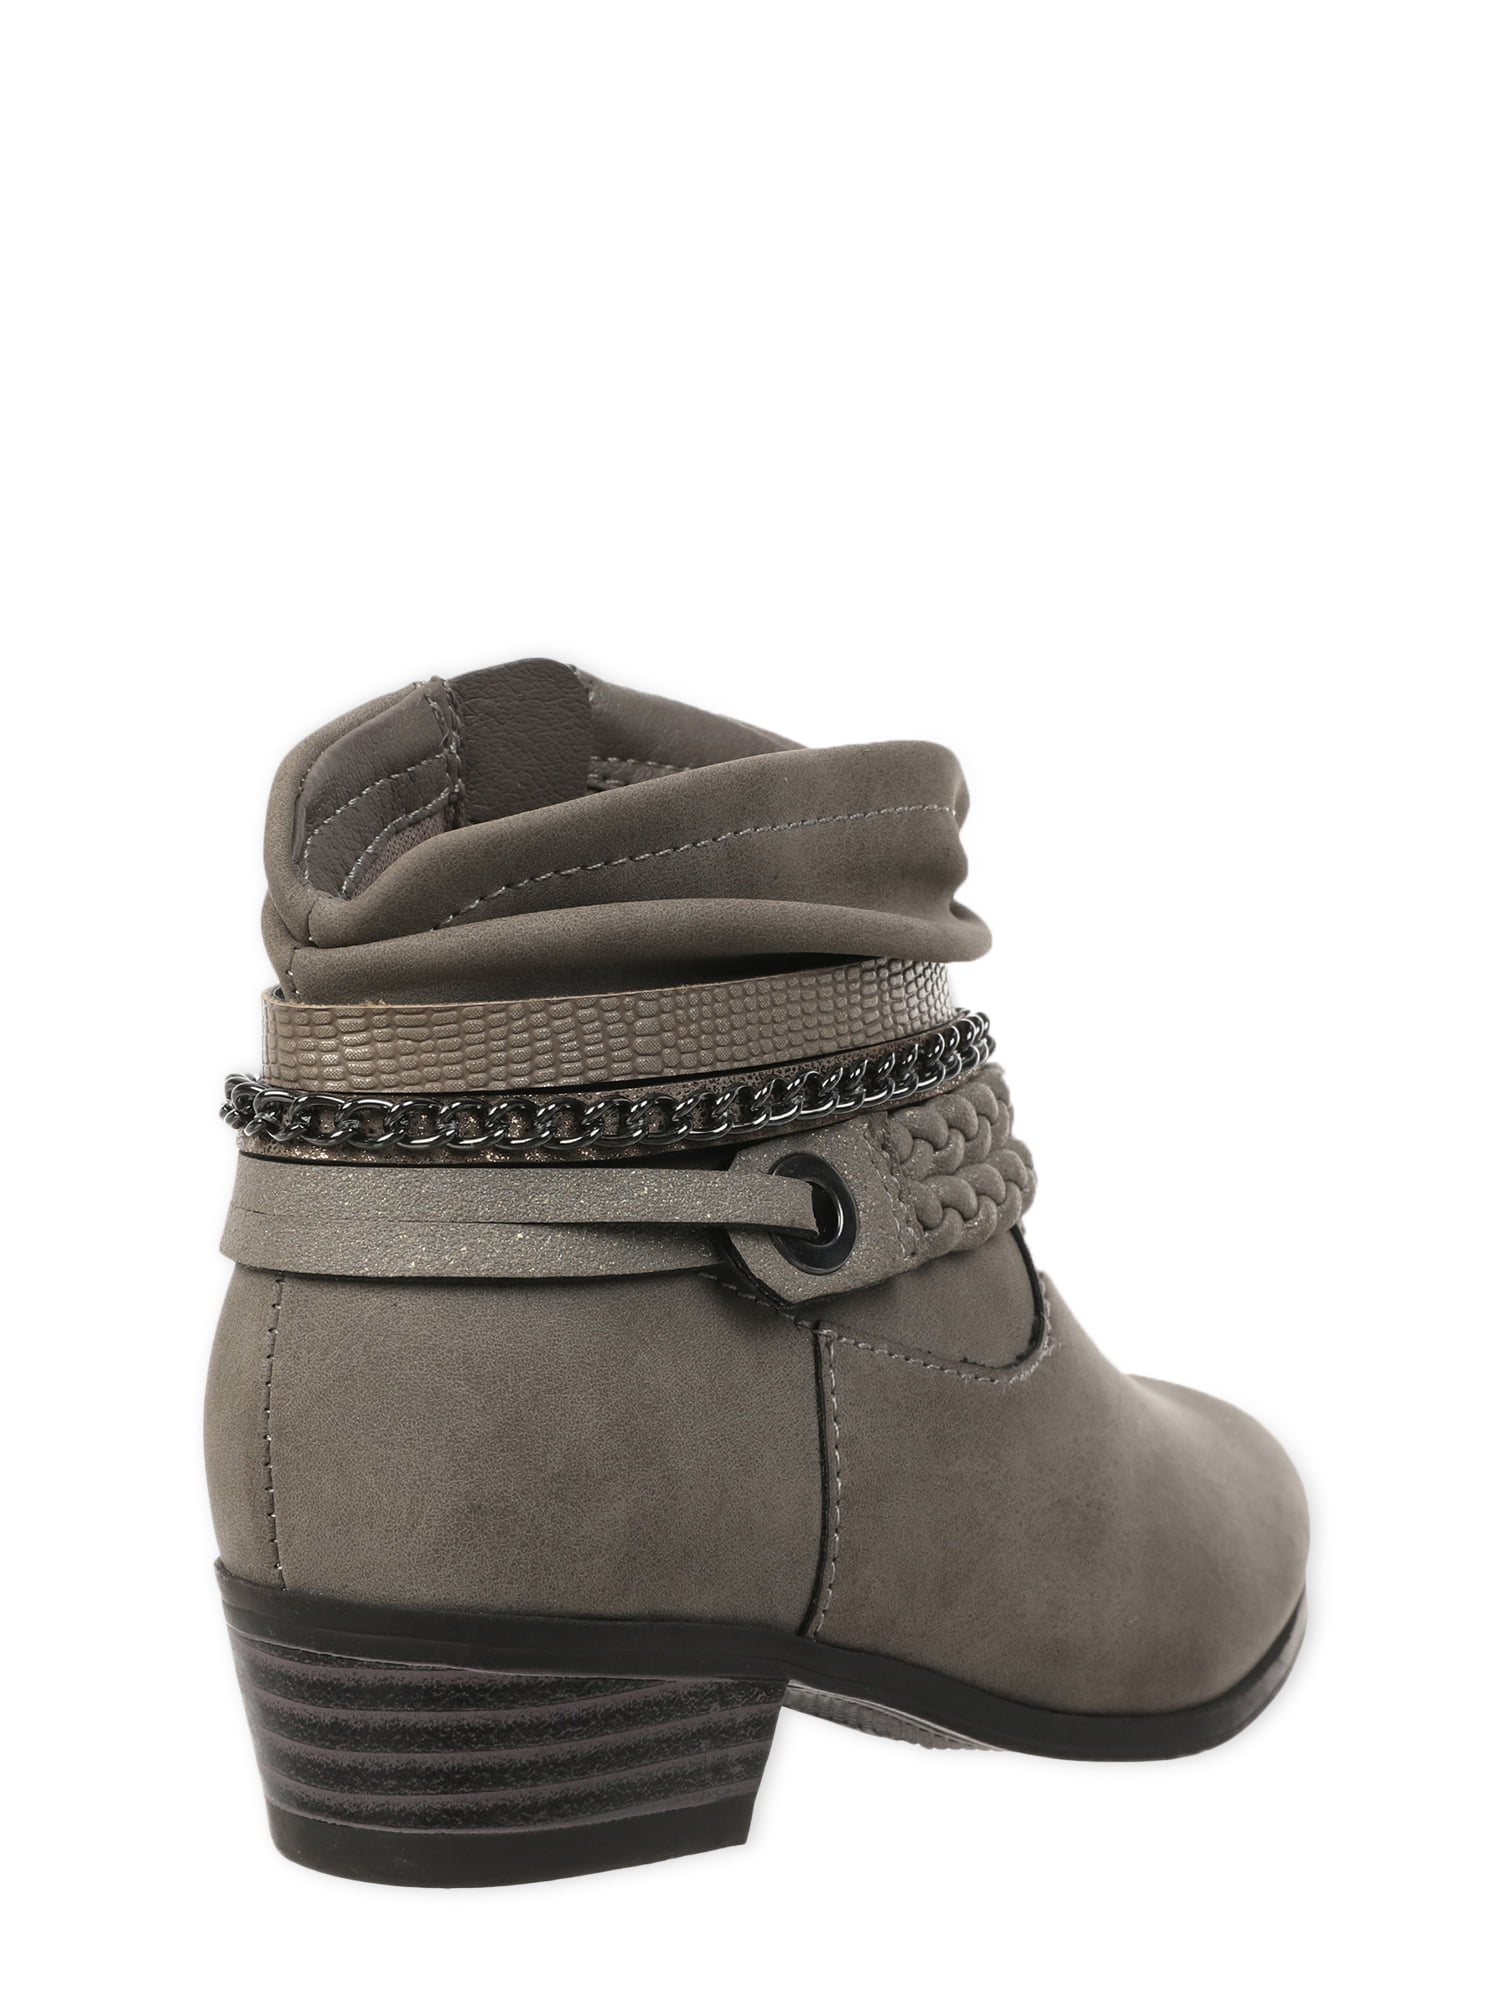 Wonder Nation Girl's Size 2 Grey Chain Fringe Zipper Non-Marking Boot Shoe